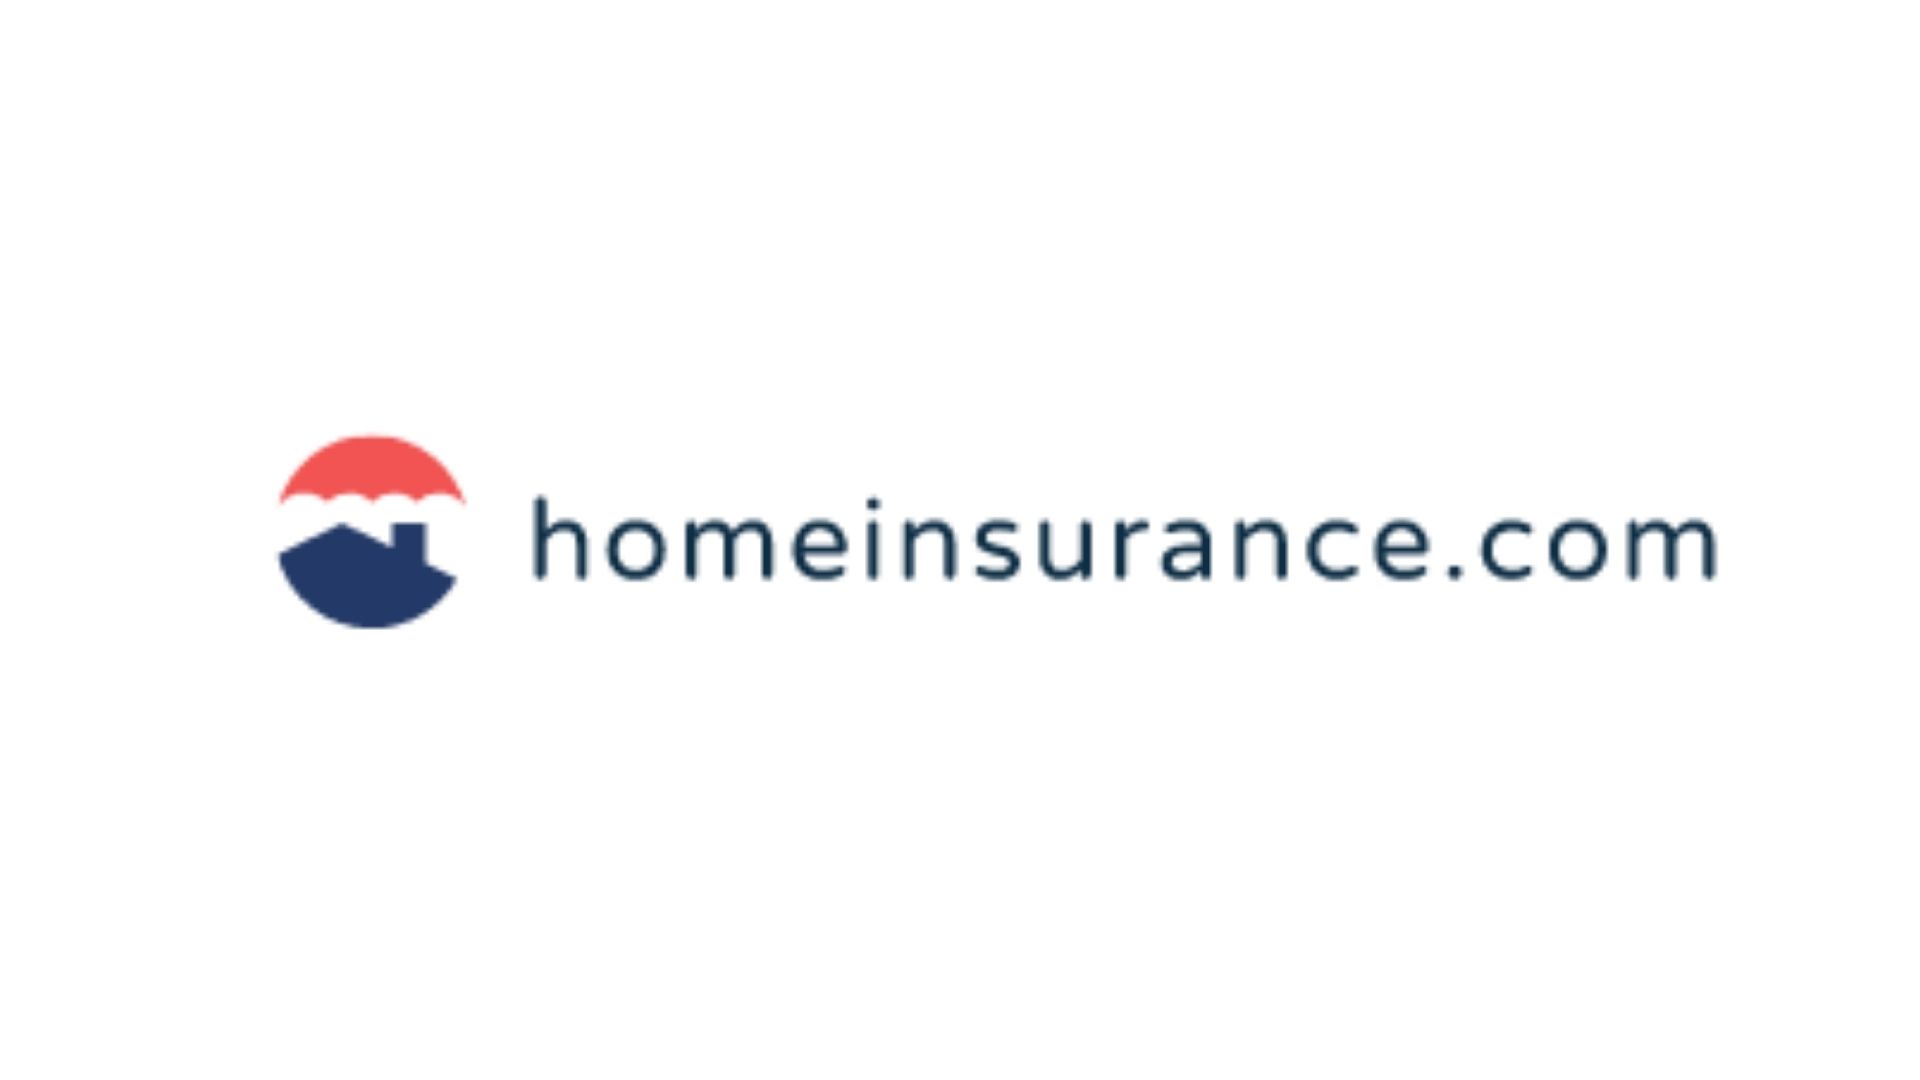 HomeInsurance.com LLC